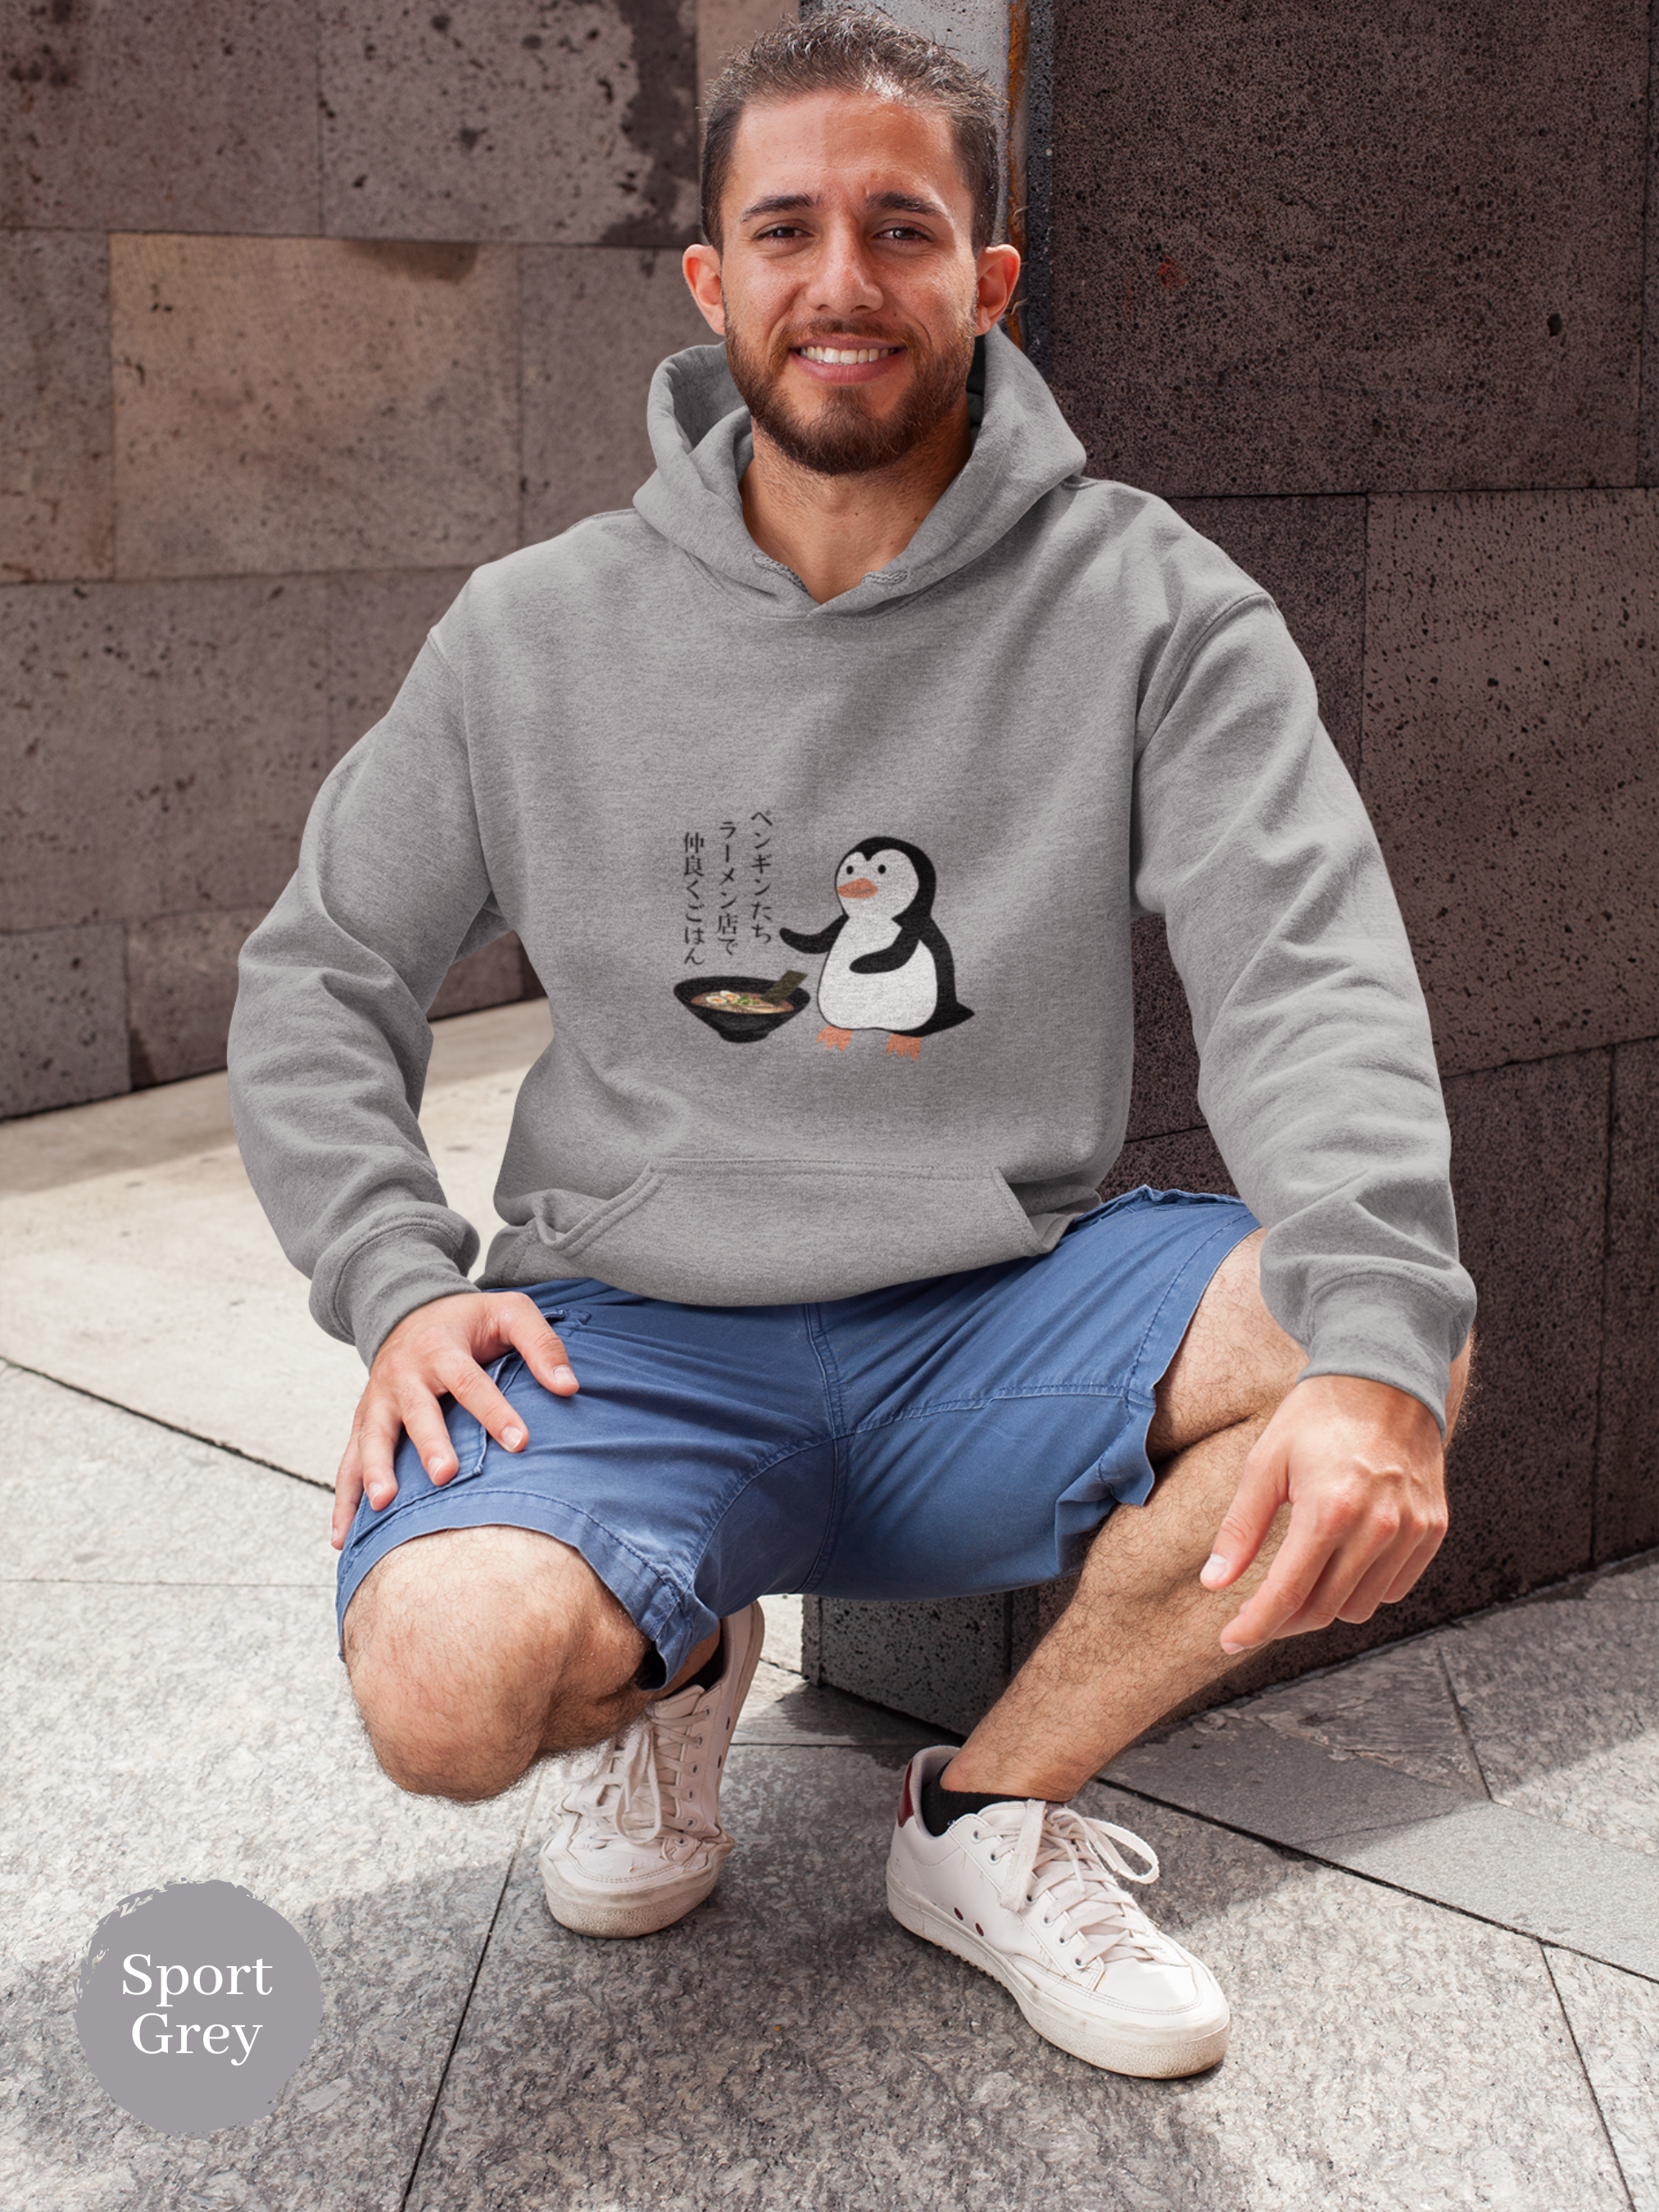 Ramen Hoodie: Penguin Ramen Delight - Foodie Hoodie with Haiku and Ramen Art